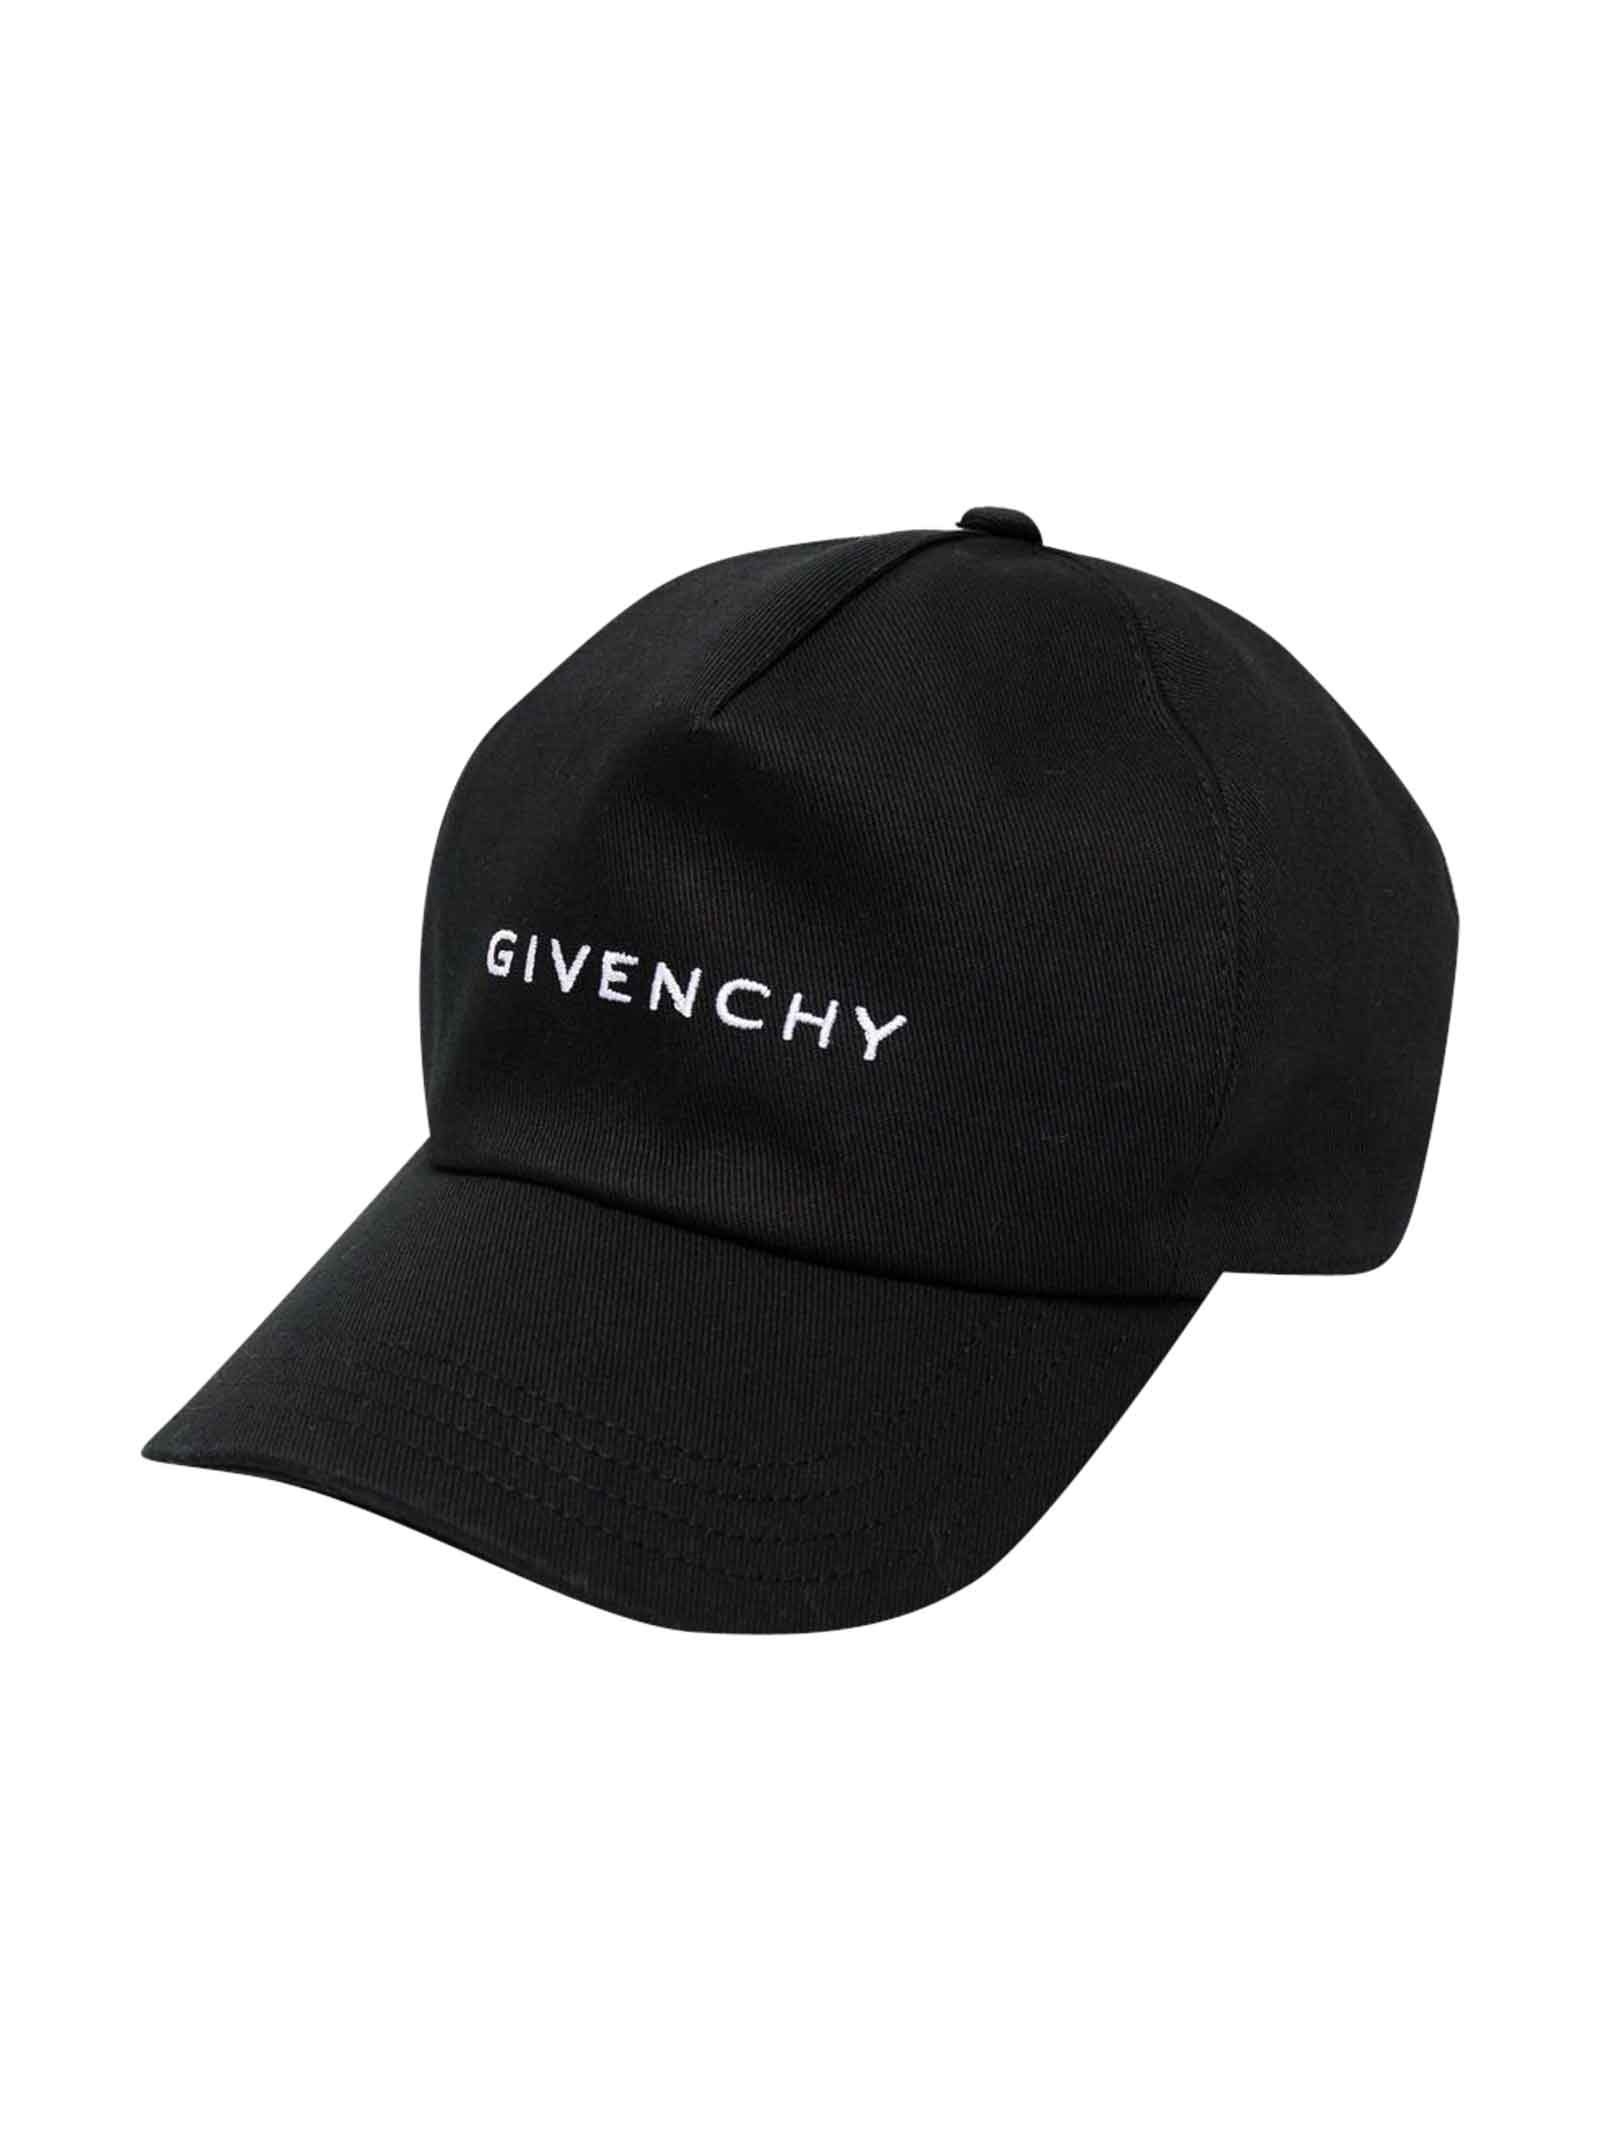 Givenchy Black Hat Boy